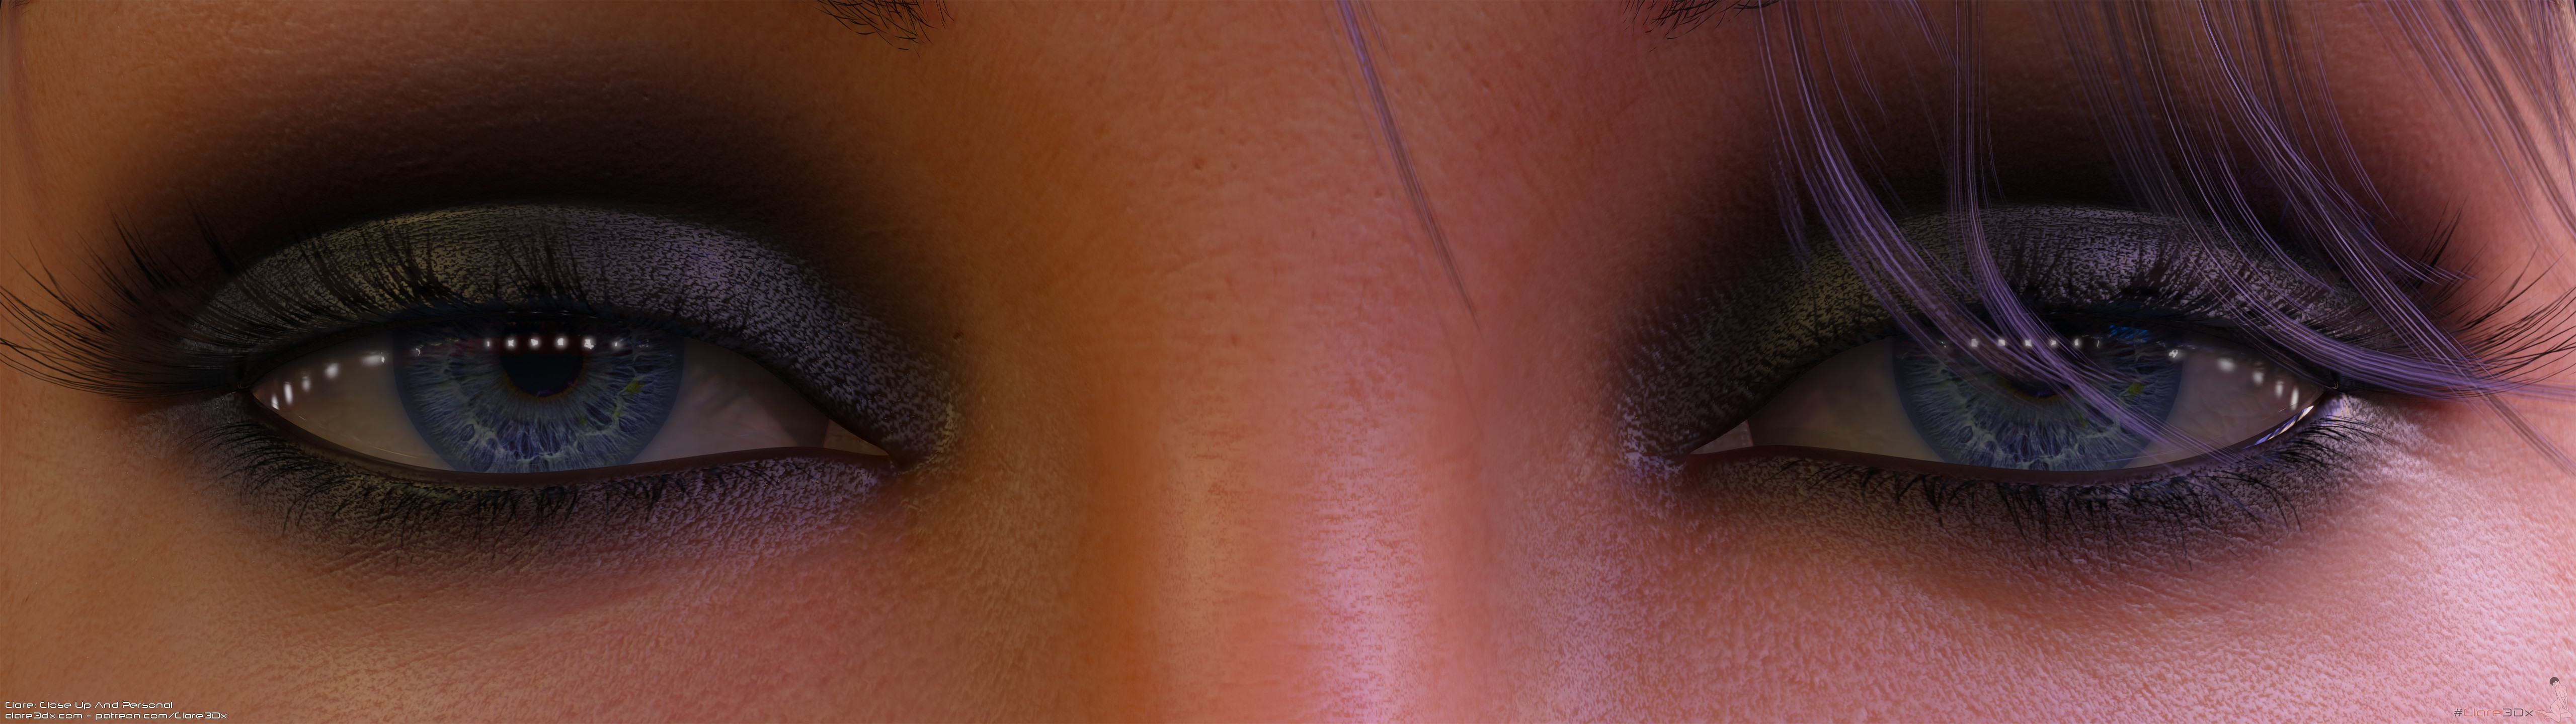 eyes, smoky eyes, women, 3Dx, CGI, ultrawide, closeupx1440 Wallpaper